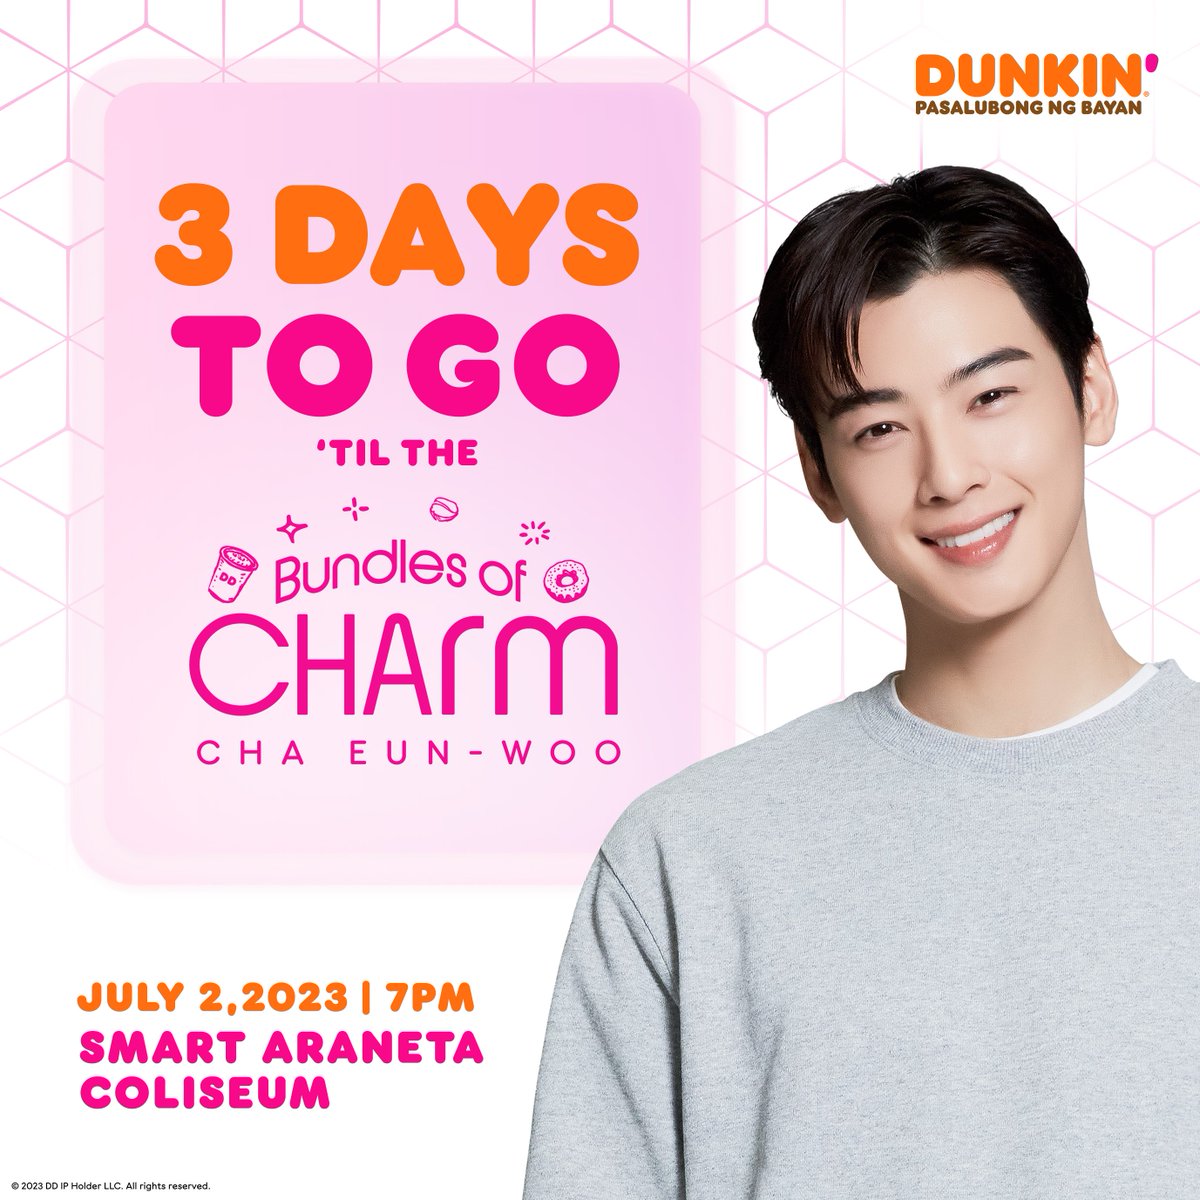 Exactly 3 days to go ‘til the #DunkinPHBundlesofCHArm fan meet with Cha Eun-Woo! #DunkinPH
#ChaEunWooDunkinPH